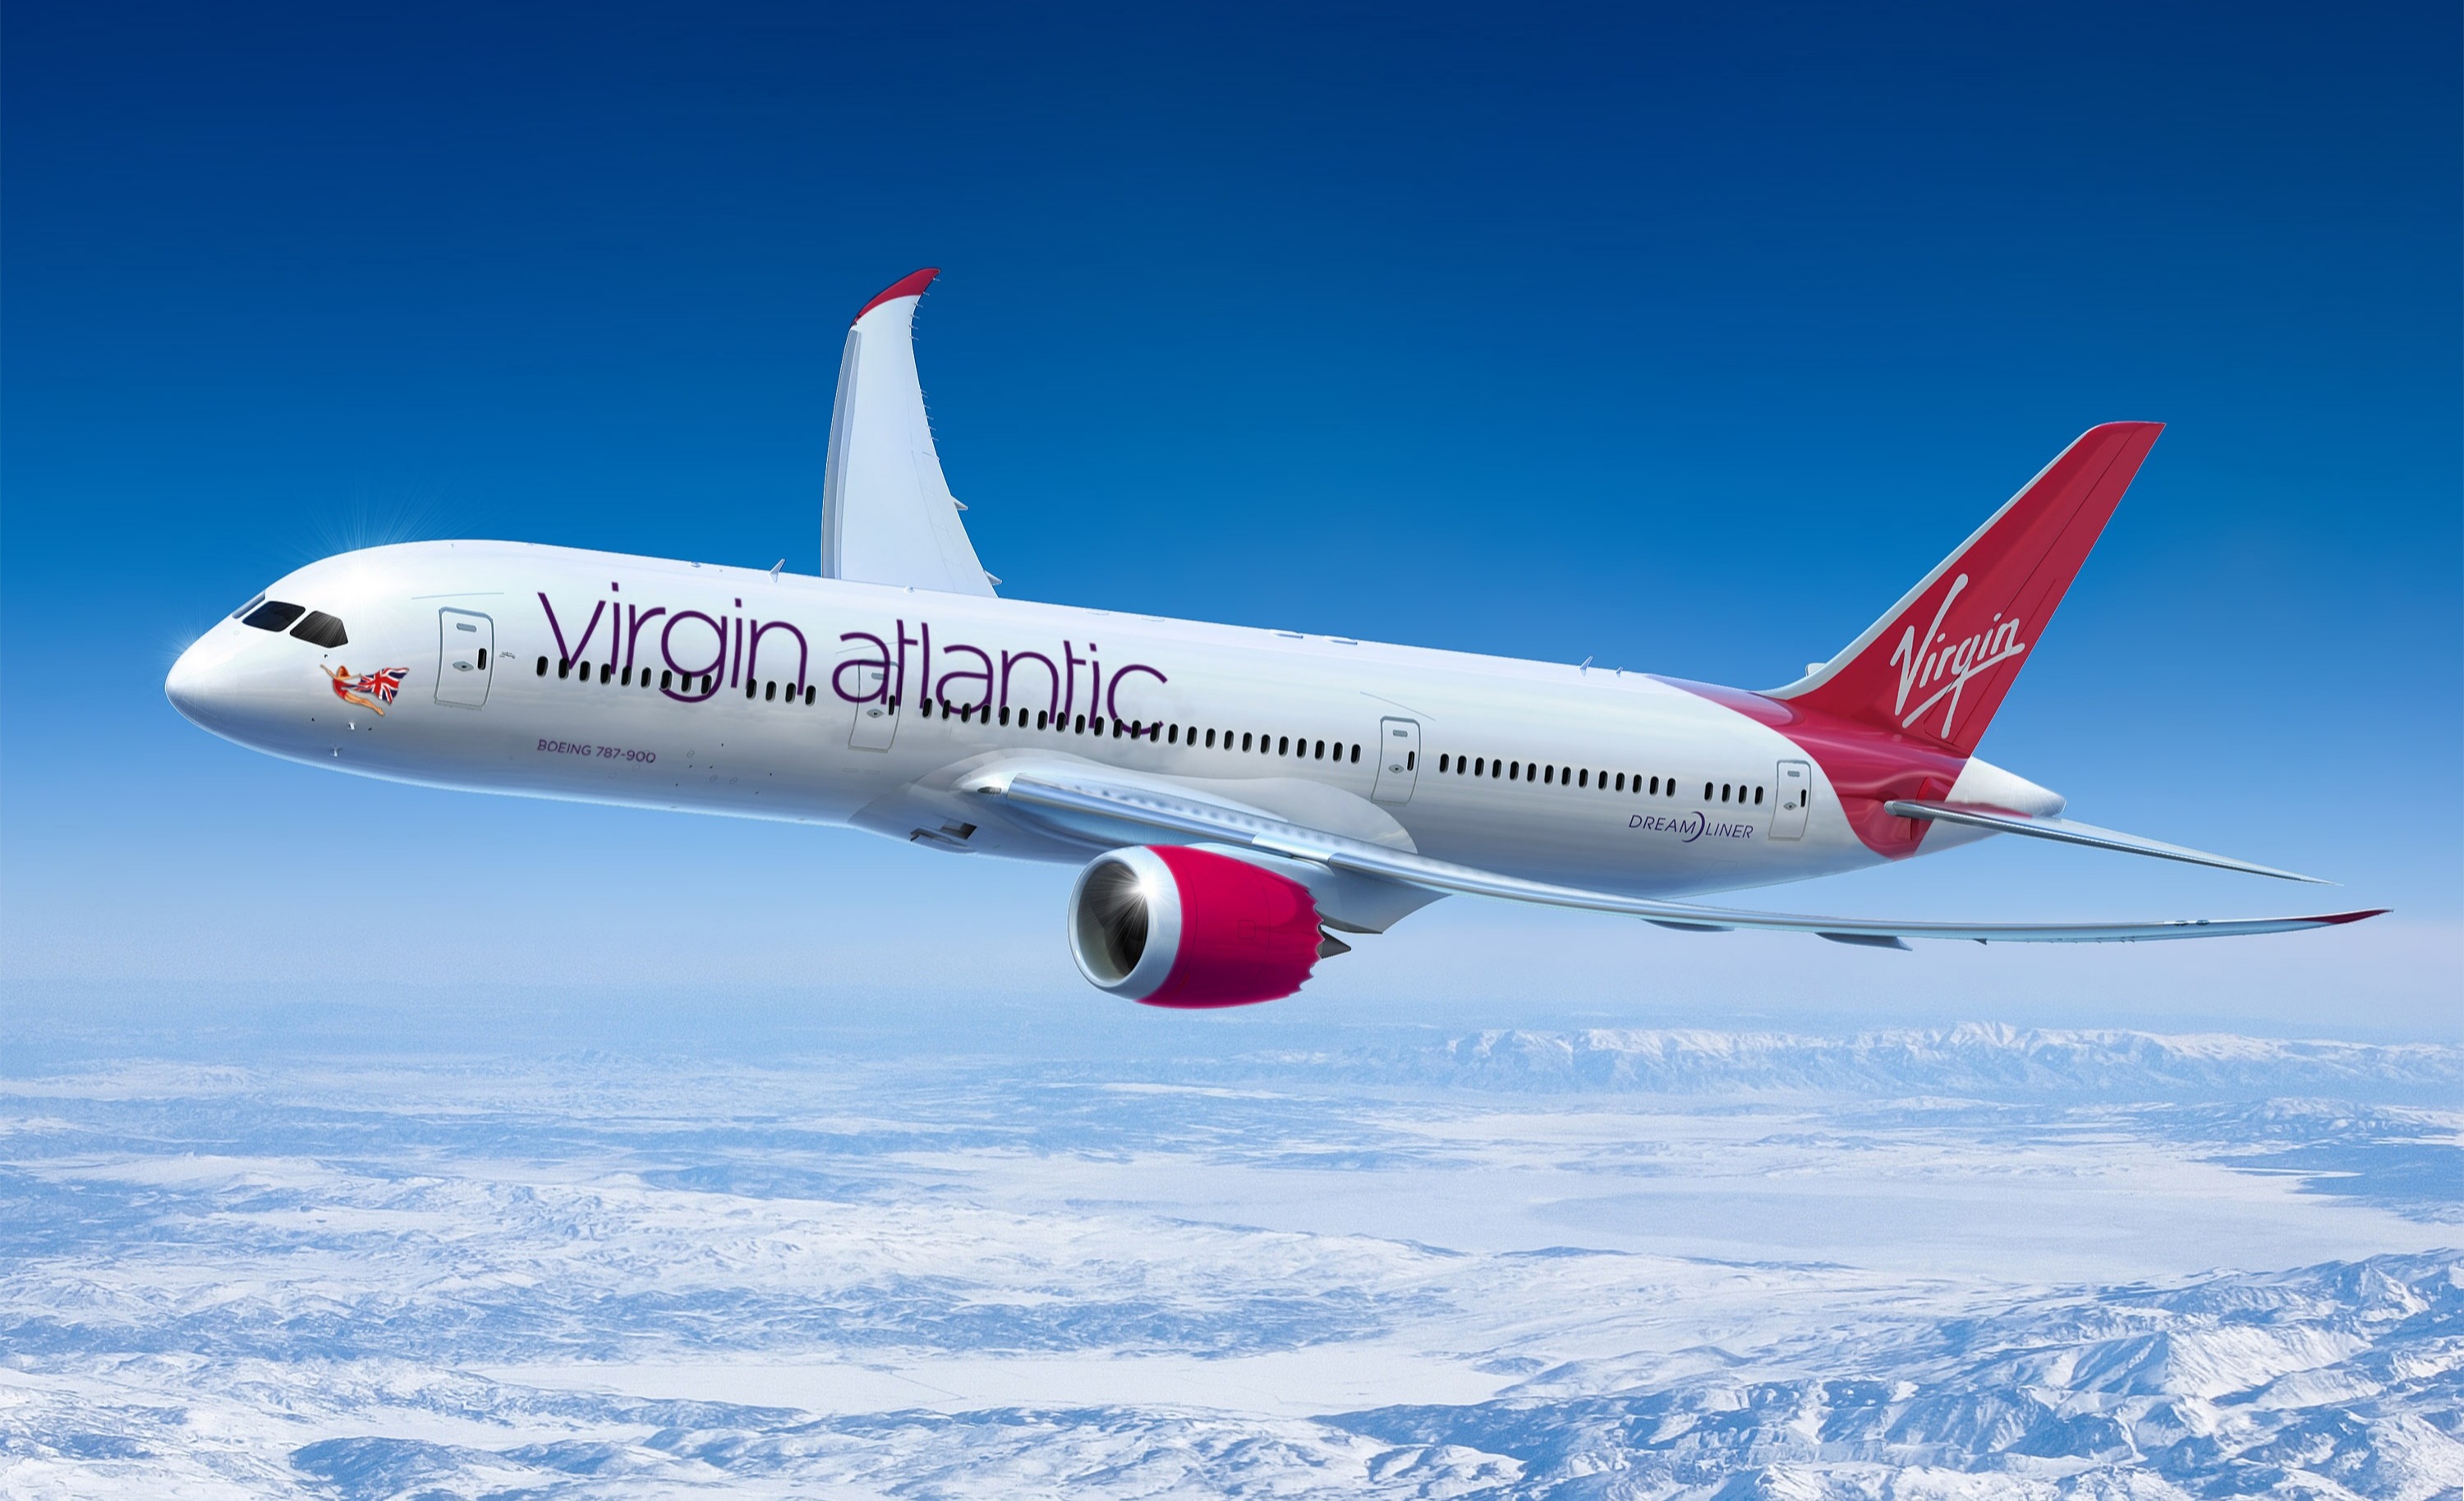 Virgin Atlantic To Operate Historic Net Zero Transatlantic Flight | Virgin